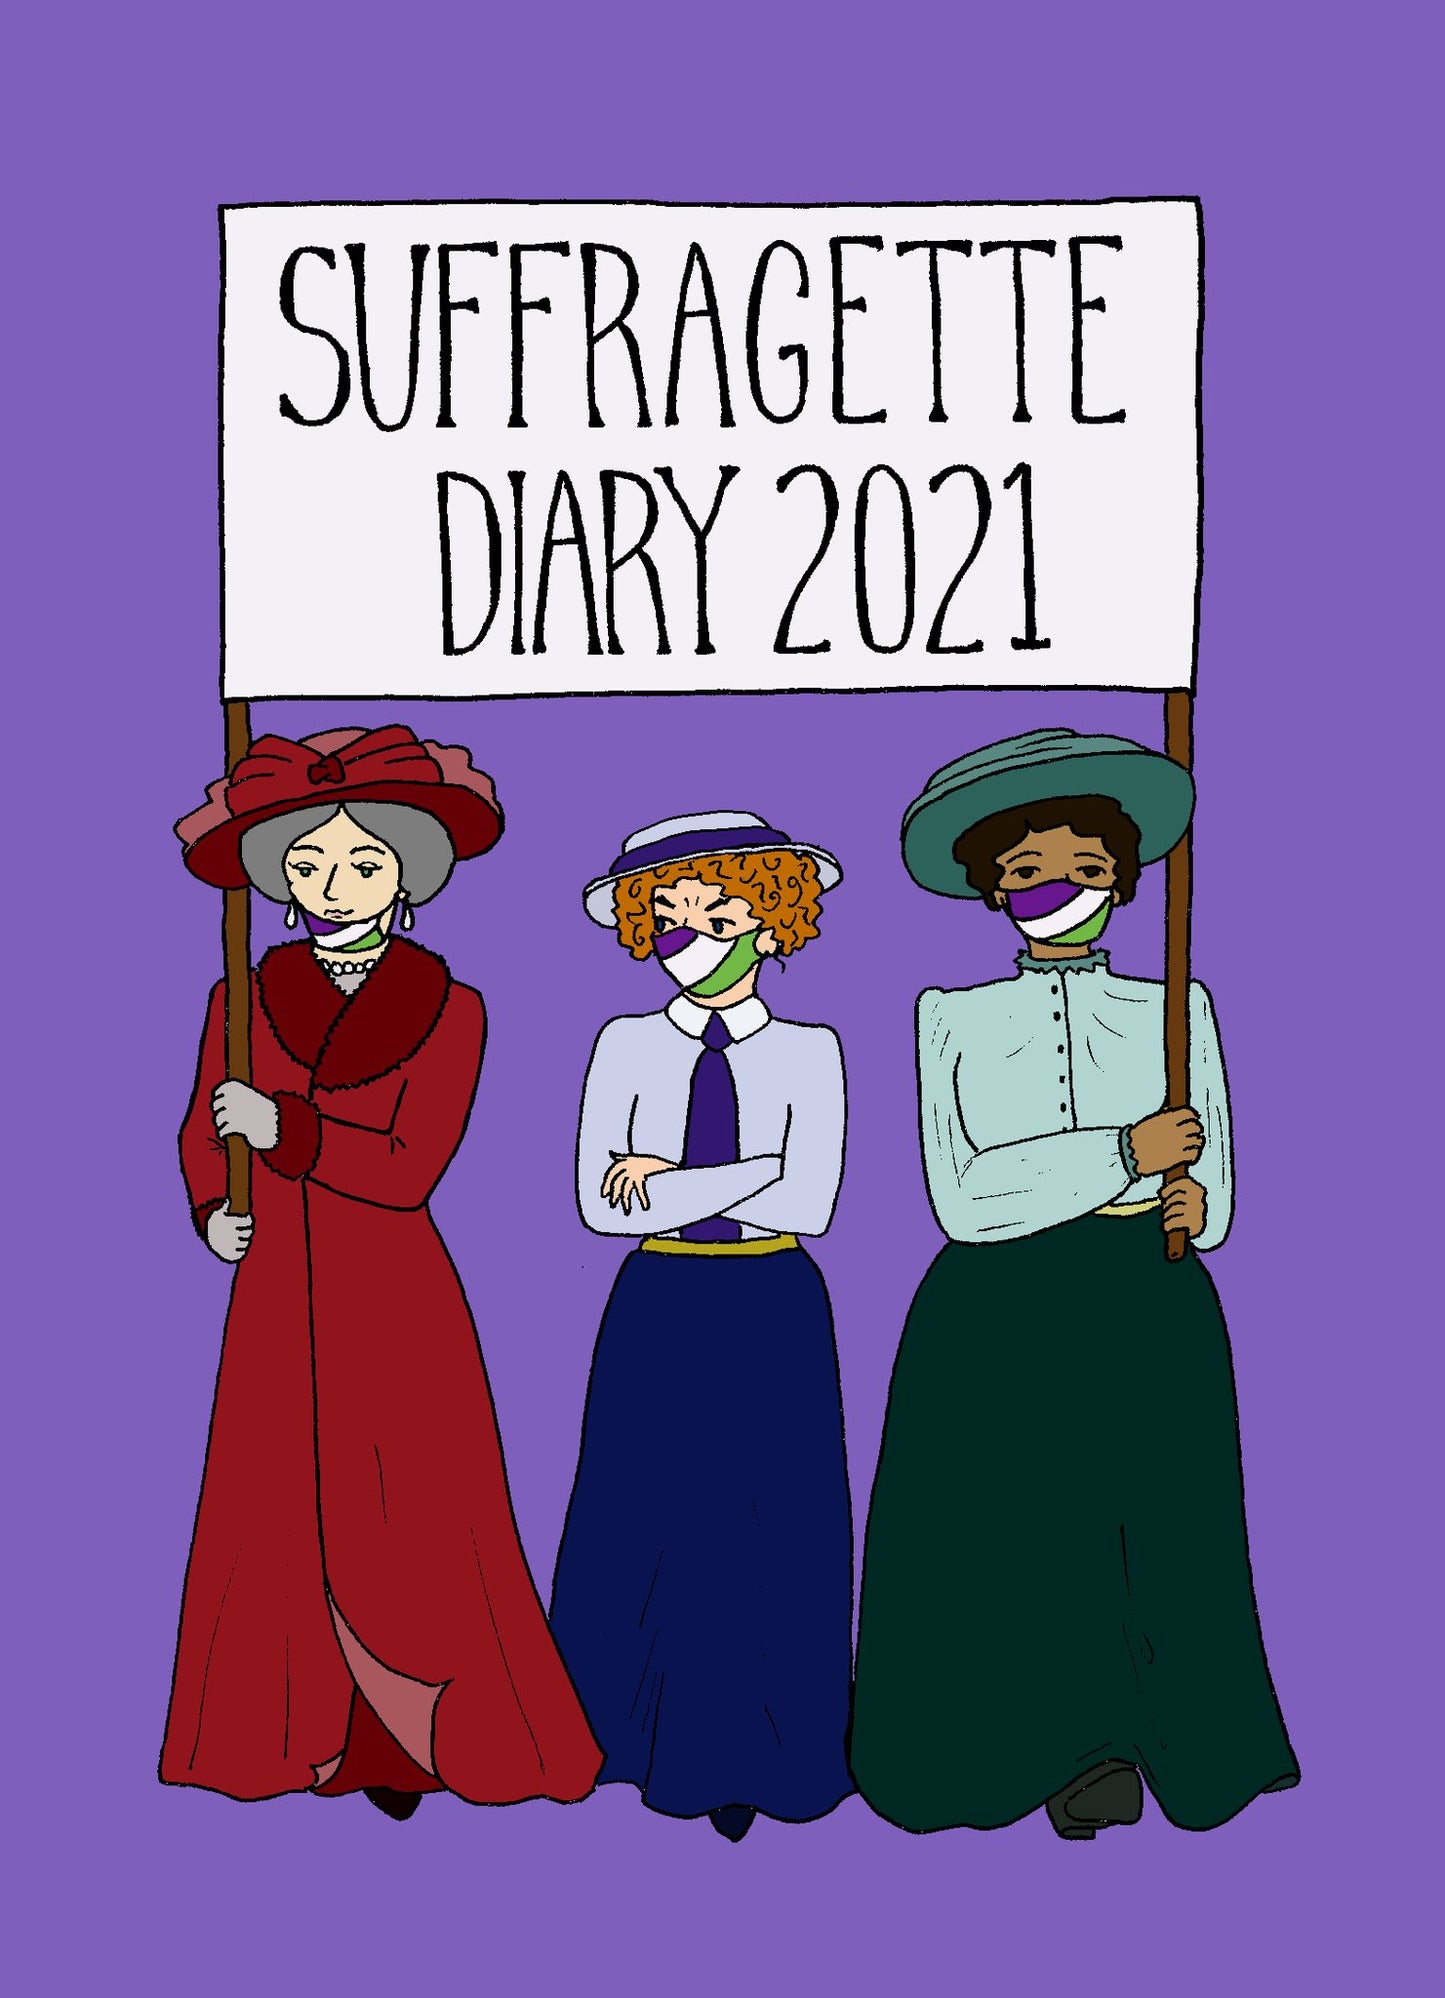 Suffragette Diary